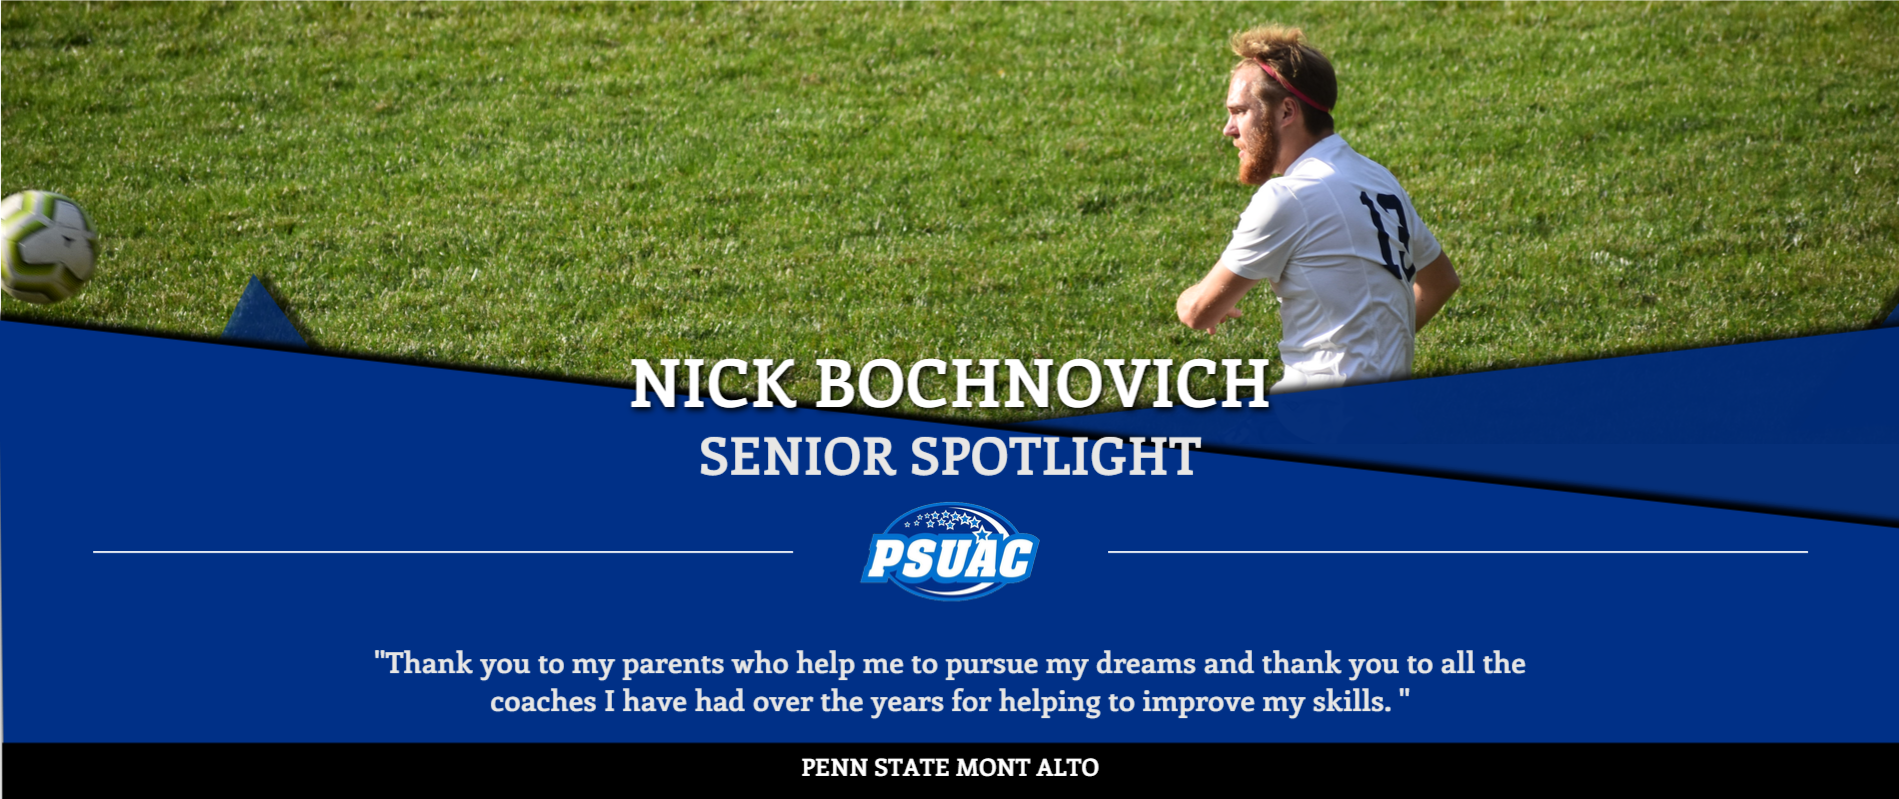 Penn State Mont Alto's Nick Bochnovich.